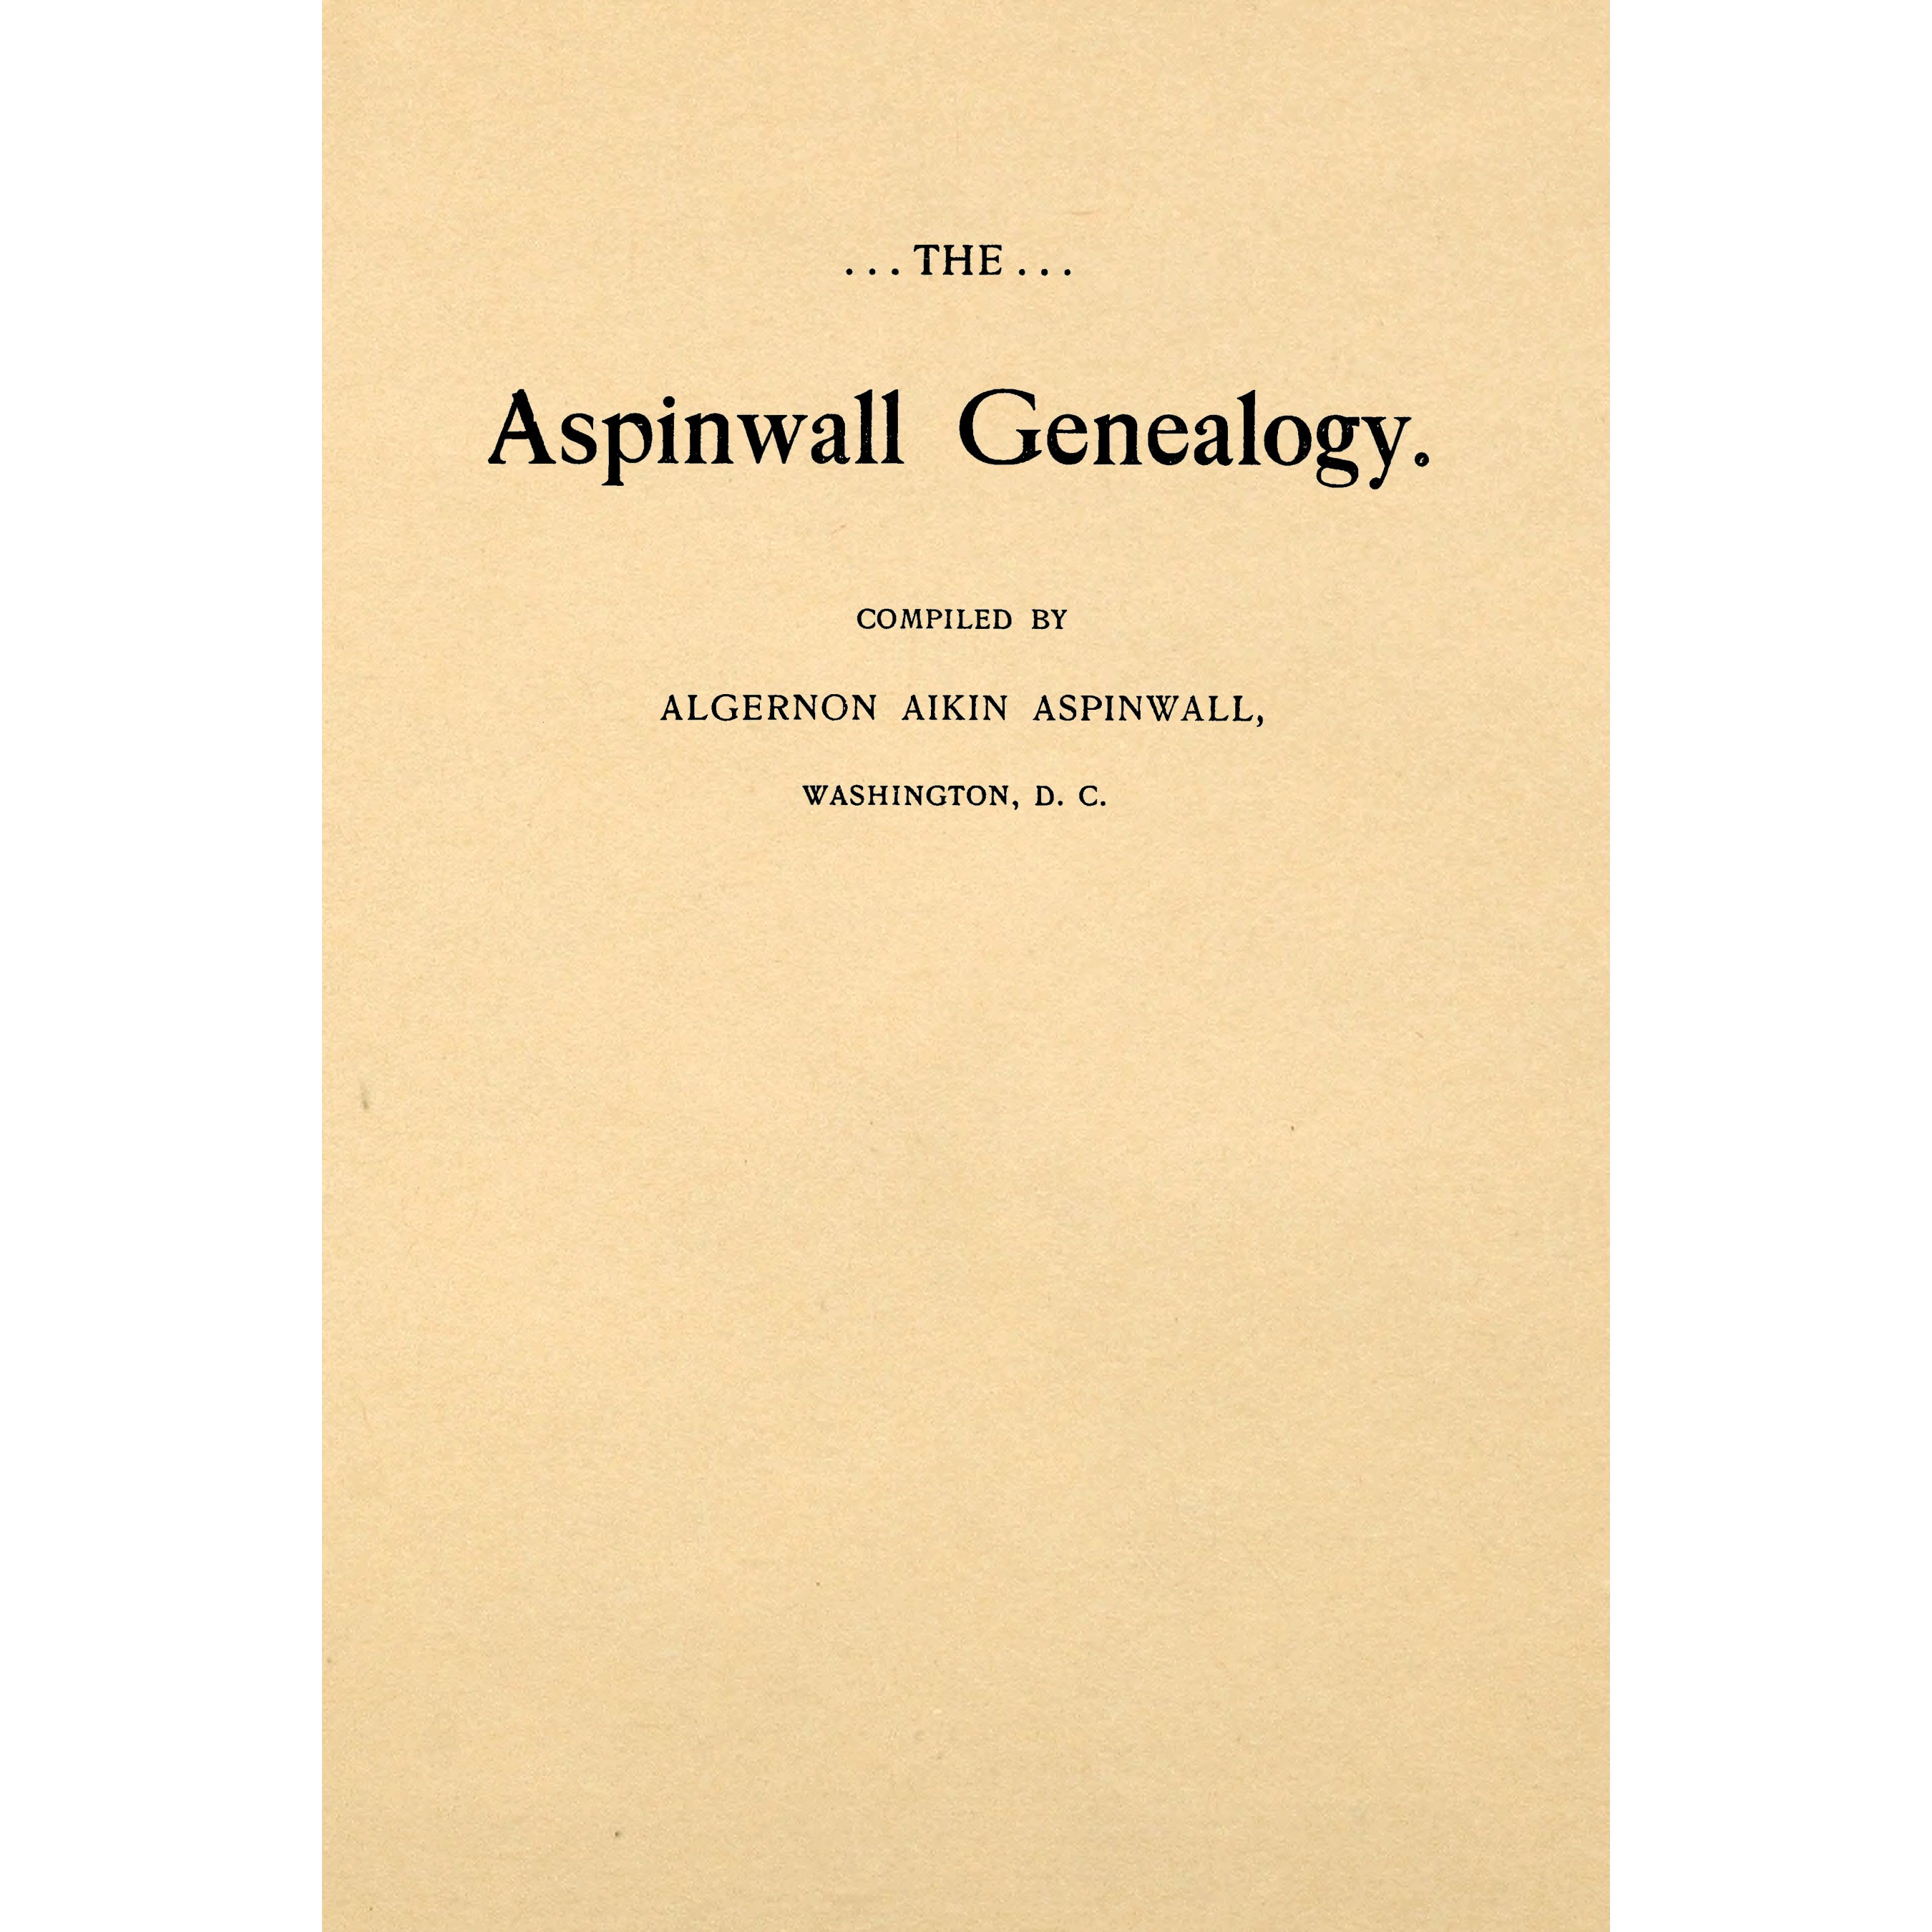 The Aspinwall genealogy